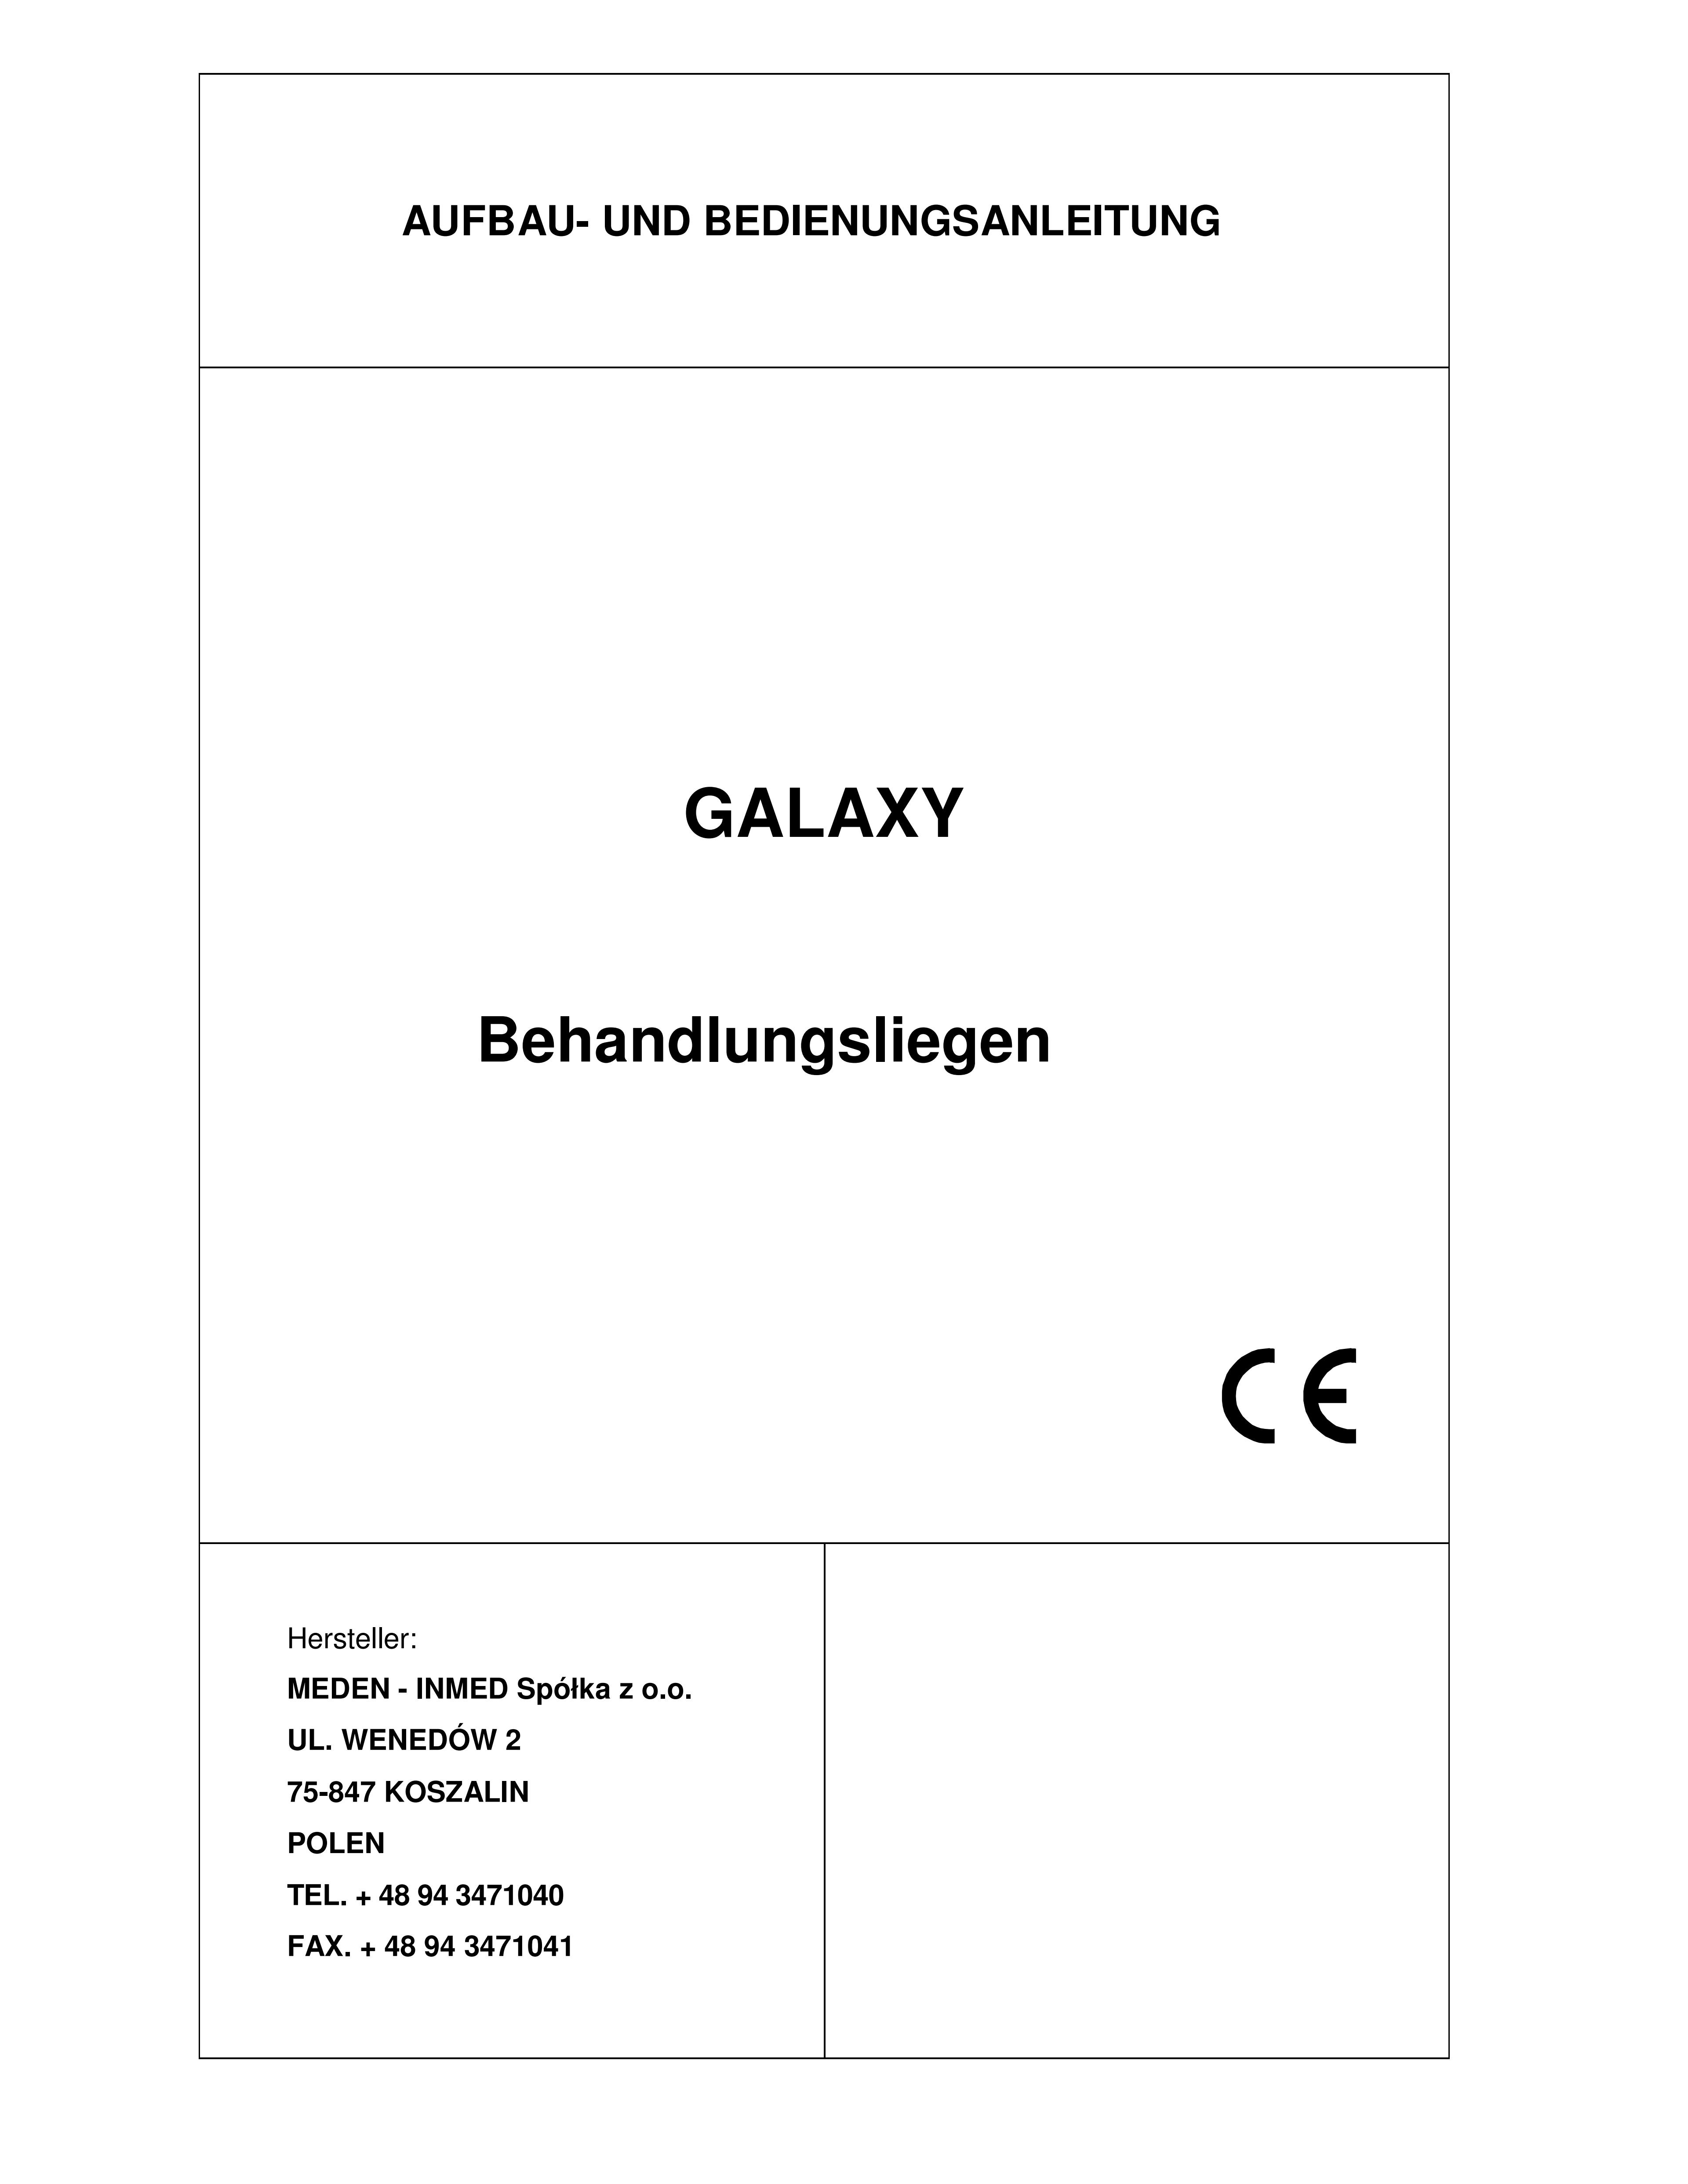 Gebrauchsanleitung_CHATTANOOGA_Galaxy_TB170714-2014-05-20.pdf